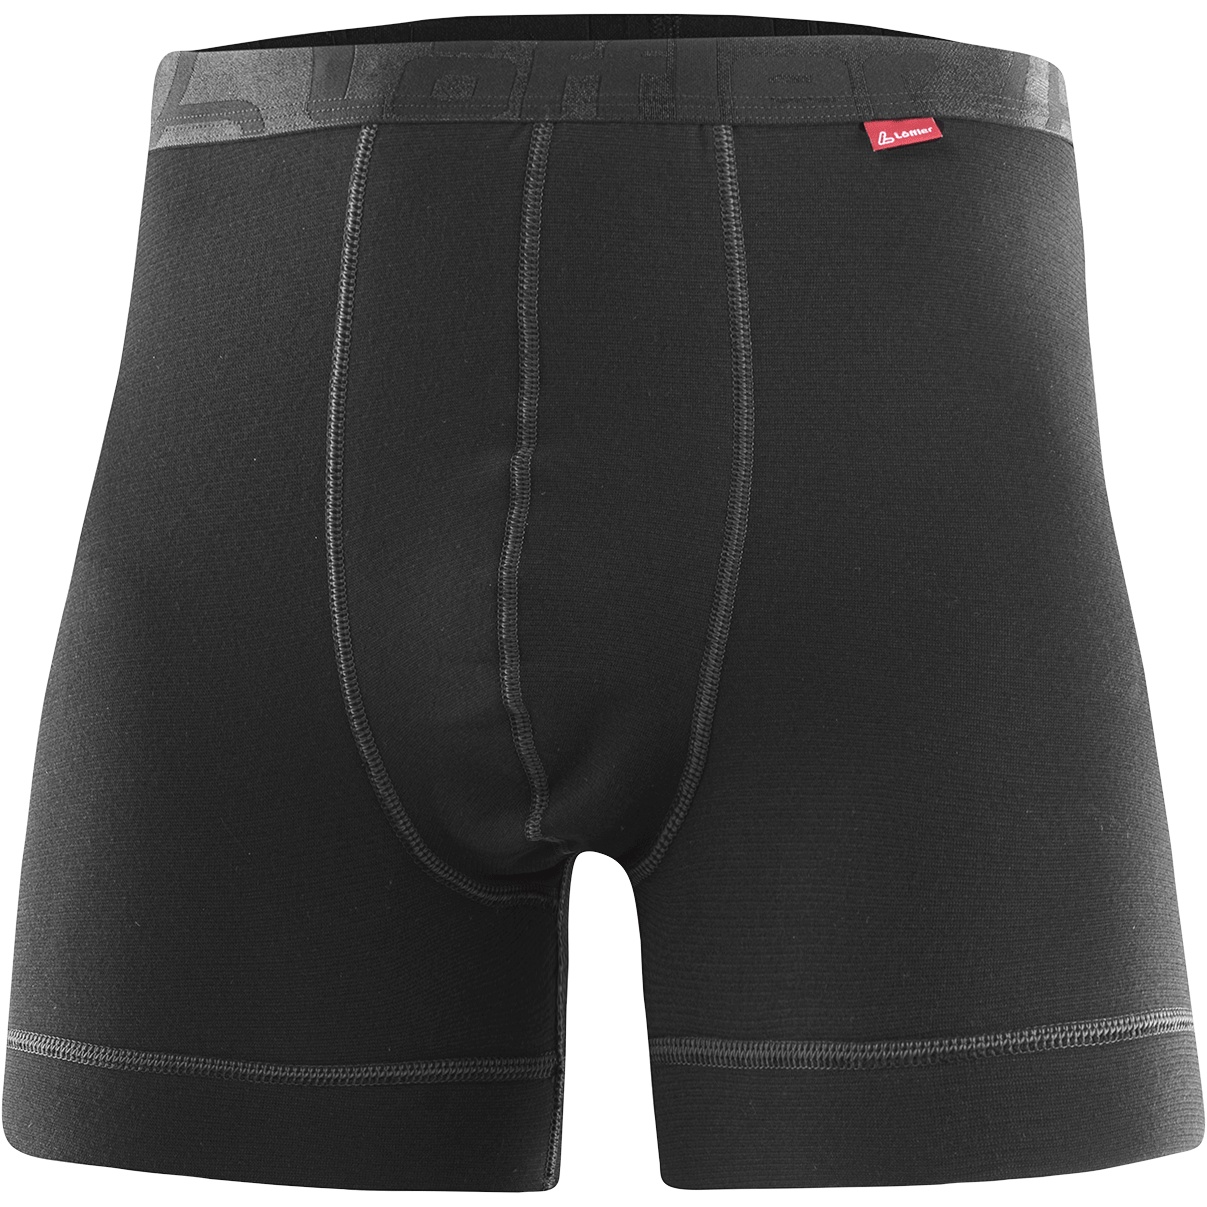 Image of Löffler Transtex® Warm Boxershorts Men - black 990